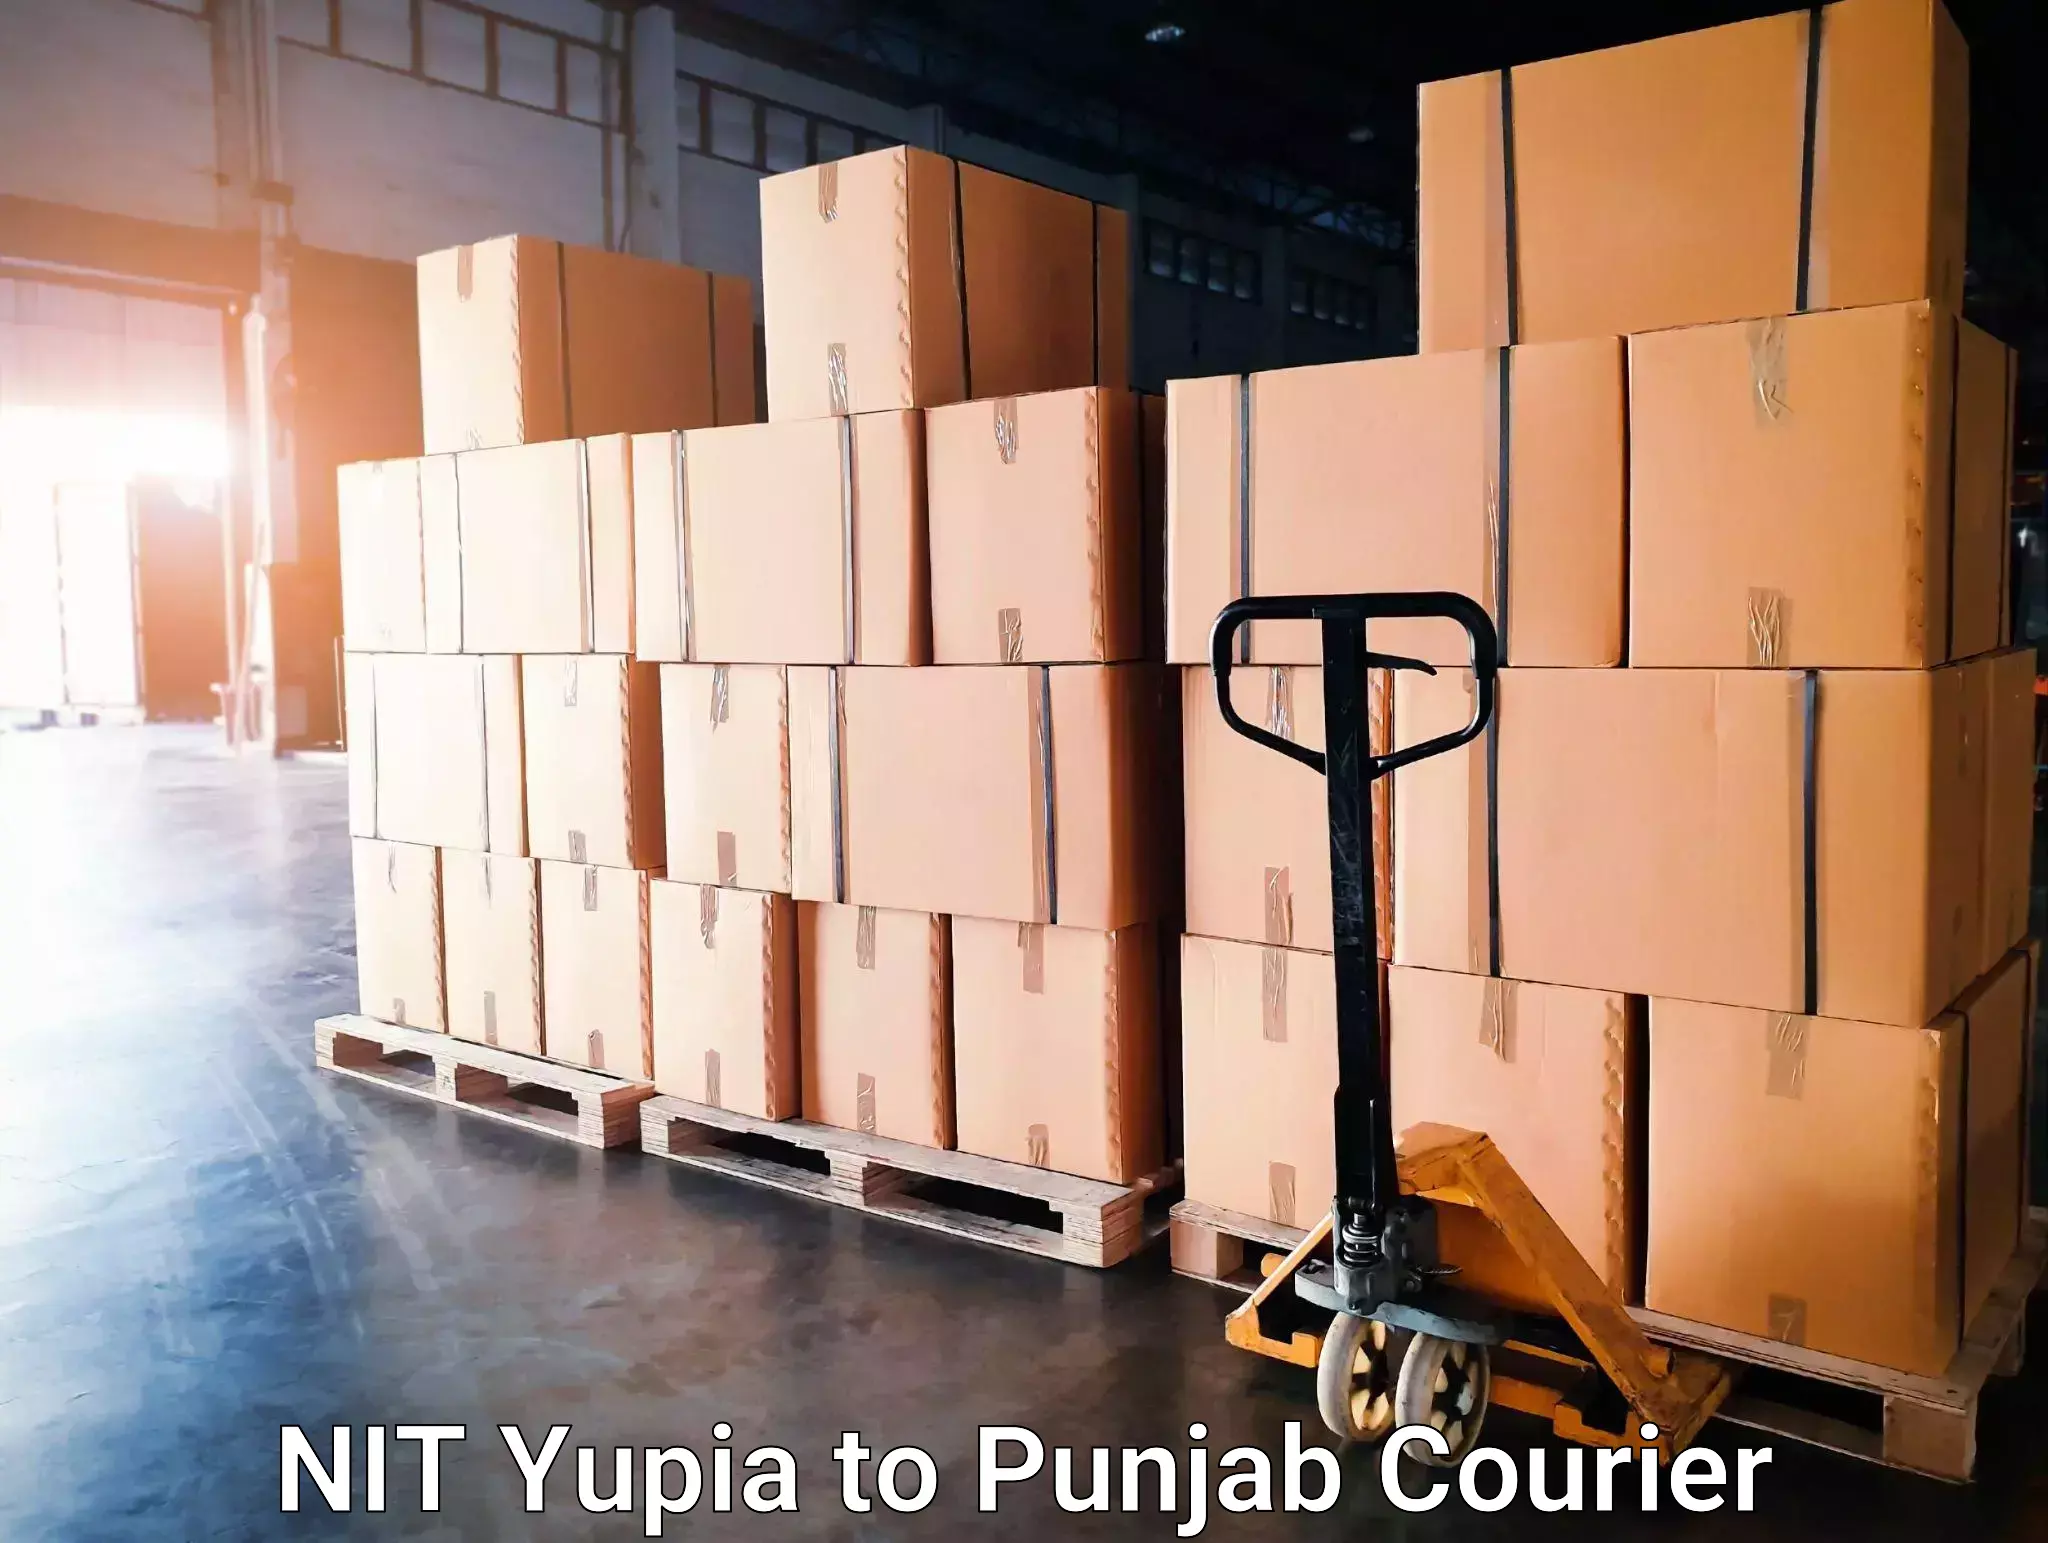 Speedy delivery service NIT Yupia to Amritsar